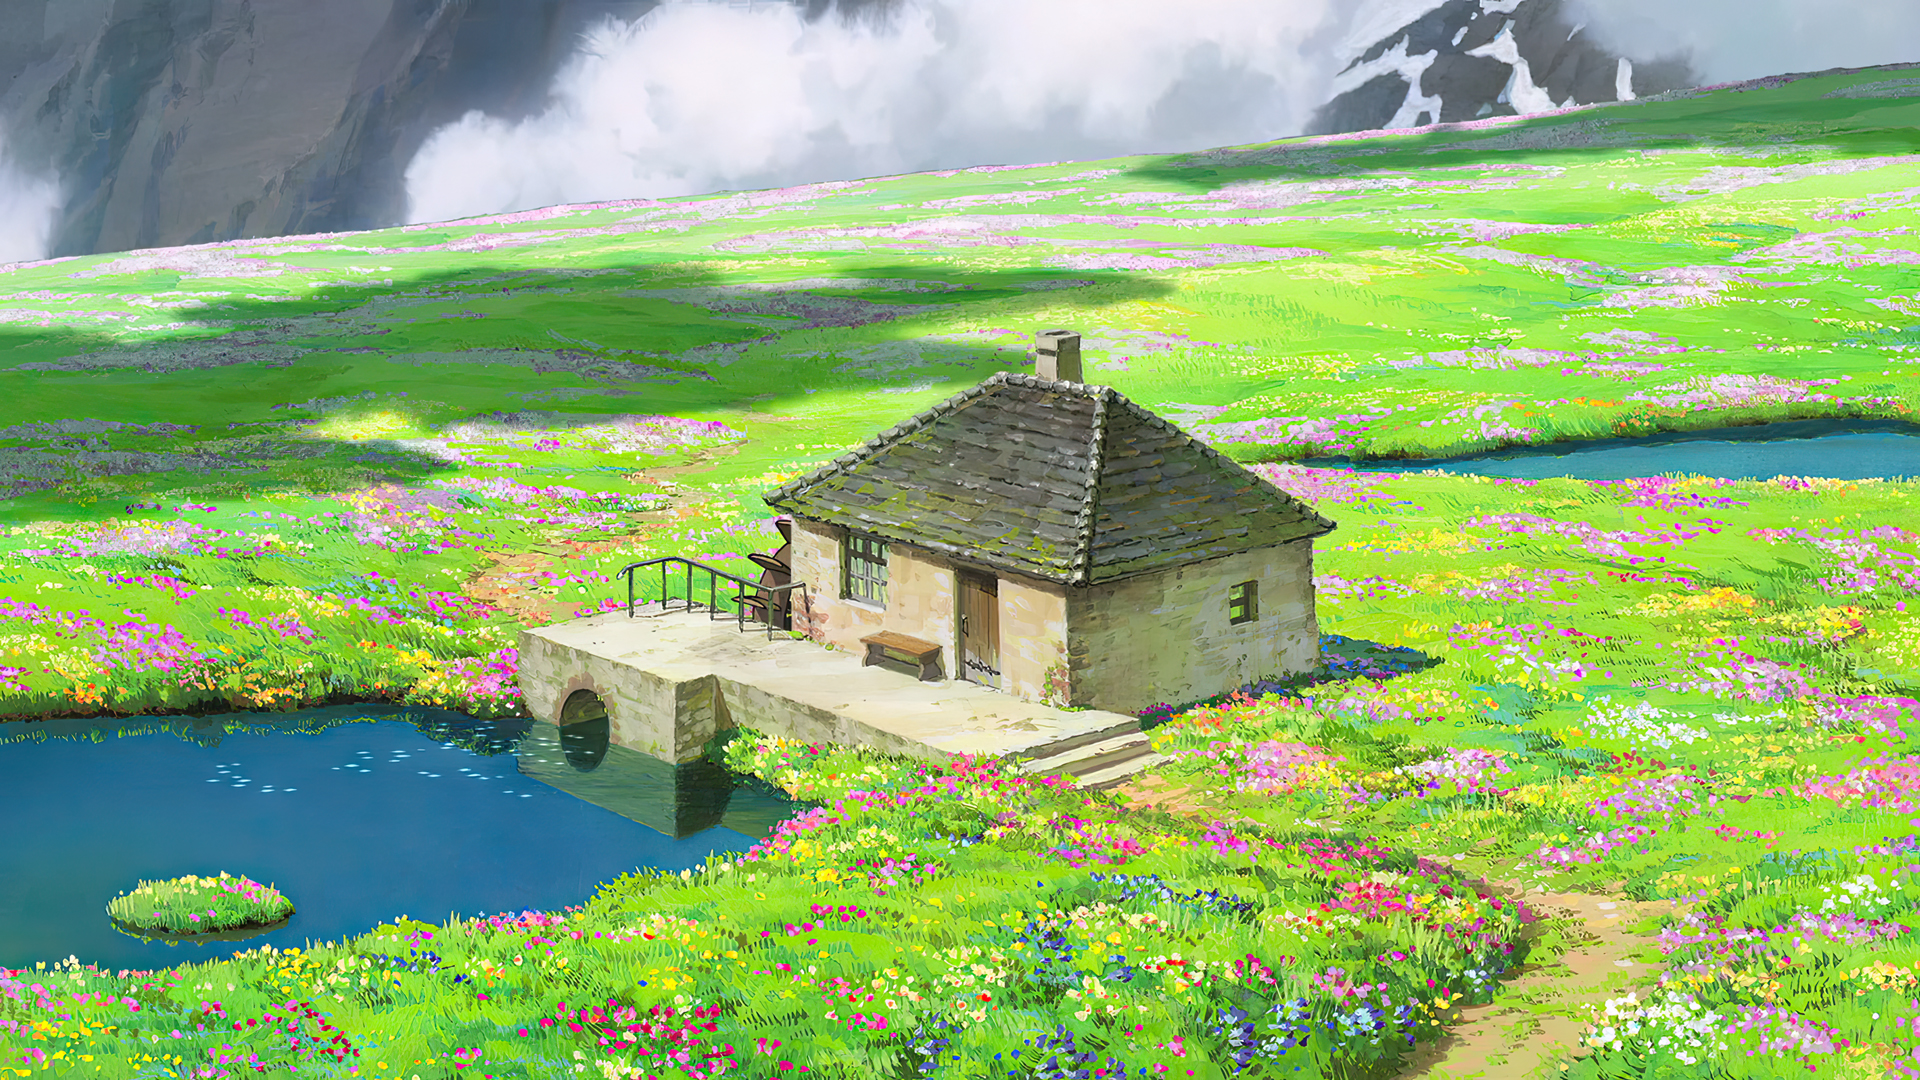 Anime 1920x1080 animated movies anime animation Studio Ghibli Hayao Miyazaki house field flowers mountains water clouds path grass